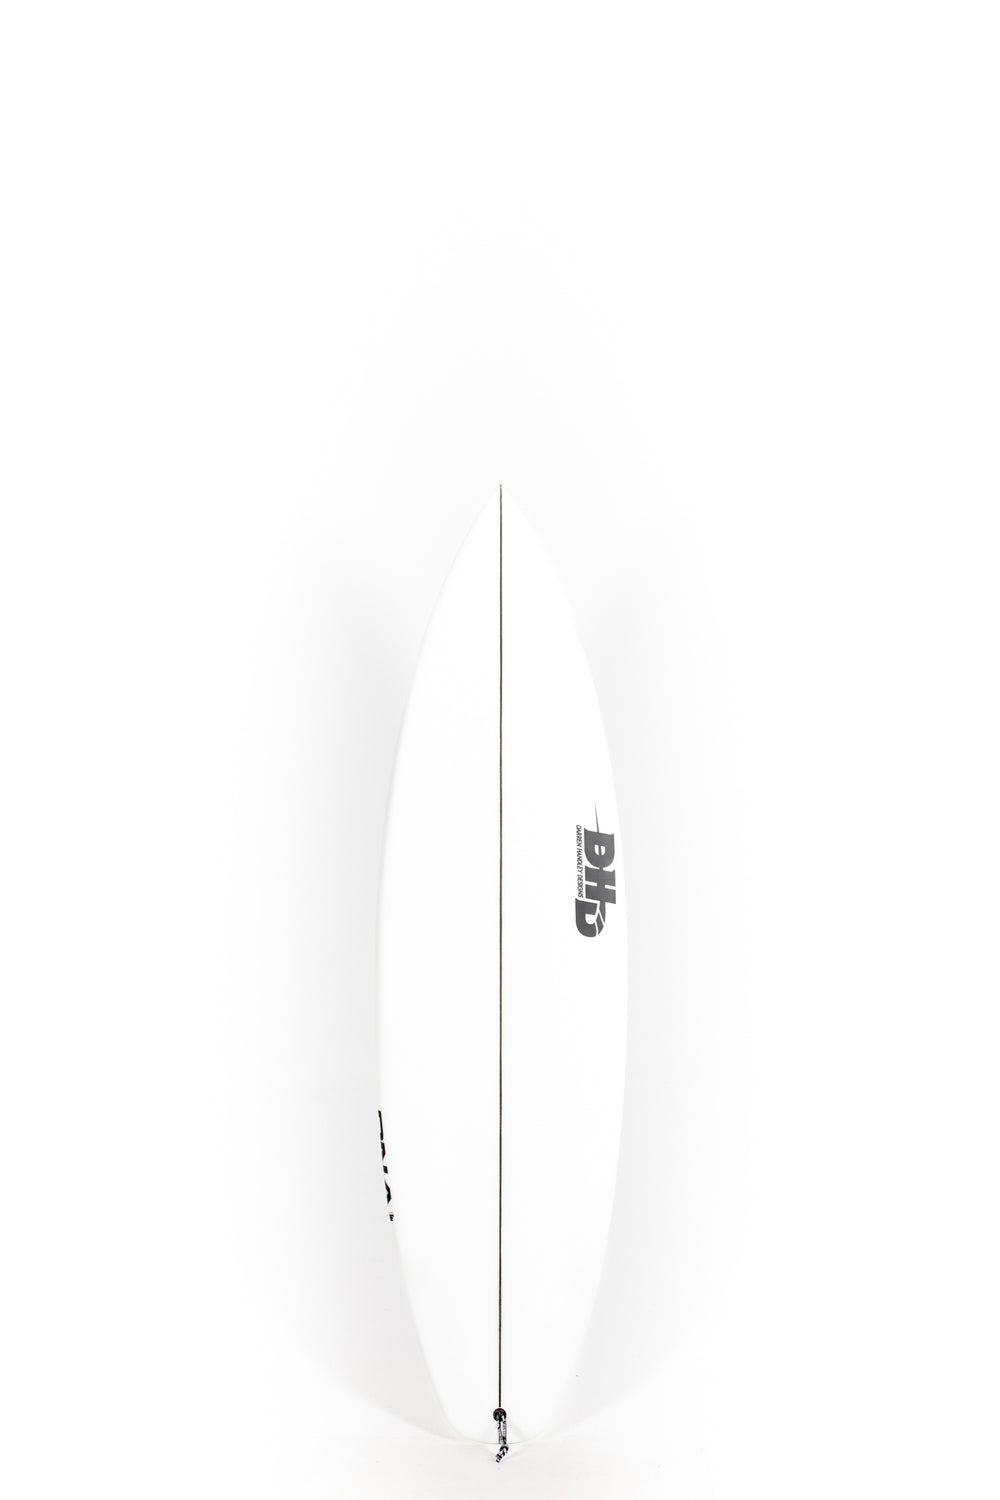 Pukas Surf Shop - DHD - DNA by Darren Handley - 5'11